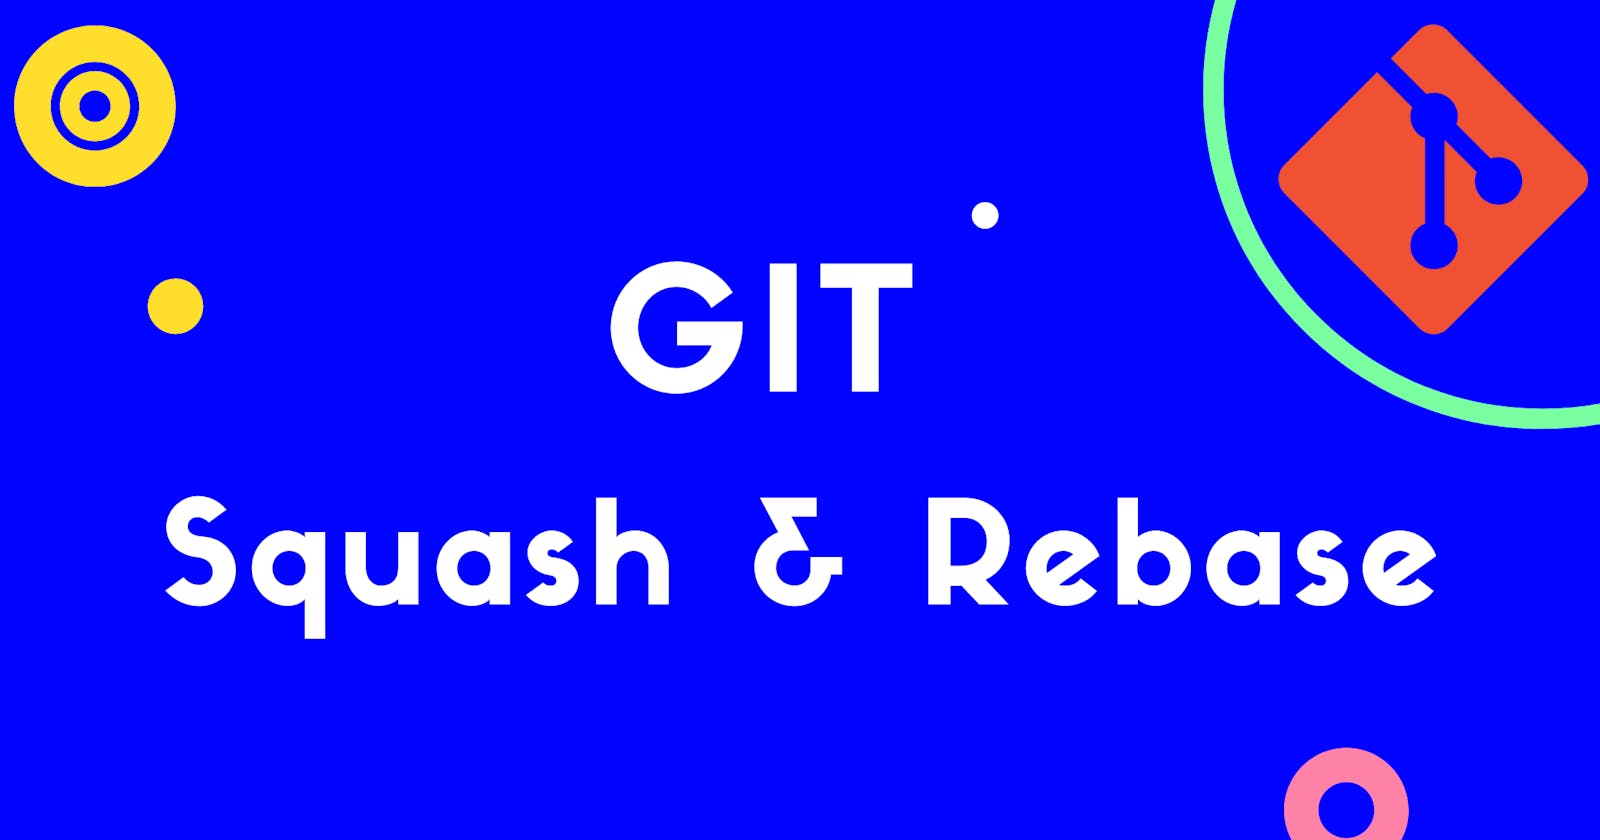 Merging Multiple Commits using GIT Squash & Rebase